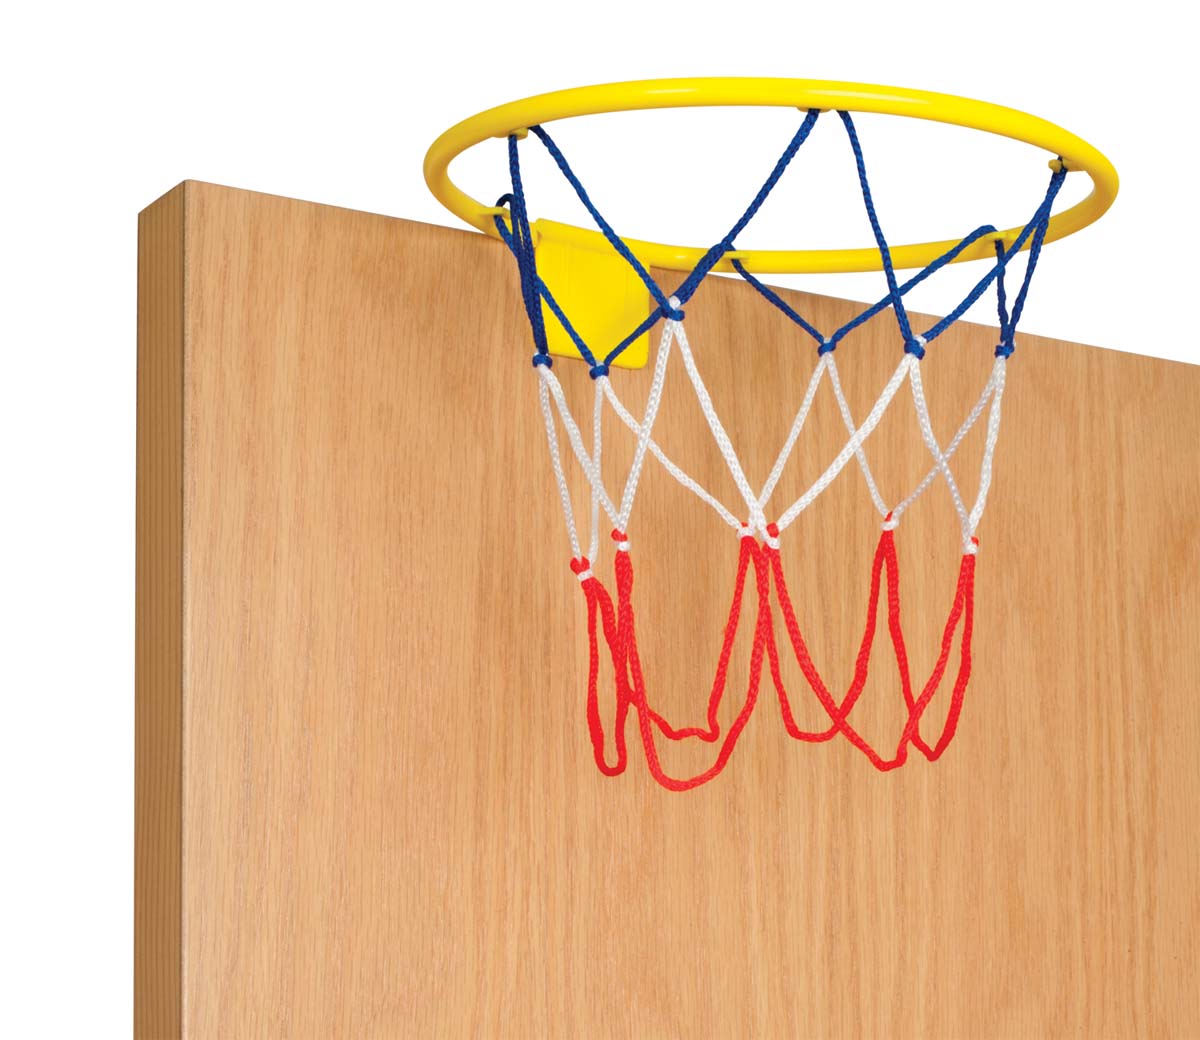 Toysmith Hoops Basketball Set